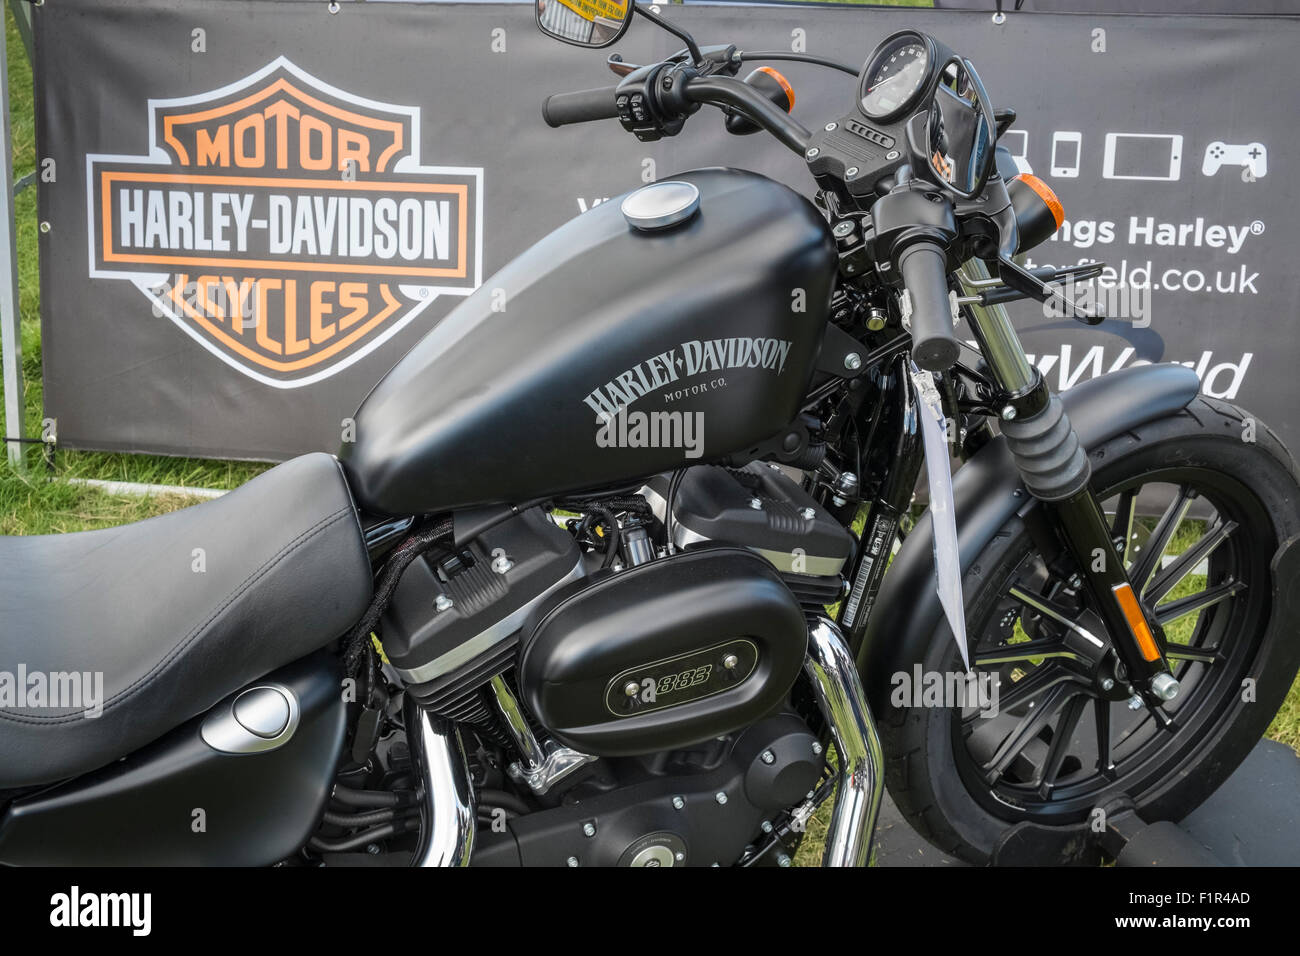 New Harley-Davidson motorcycle on display. Stock Photo